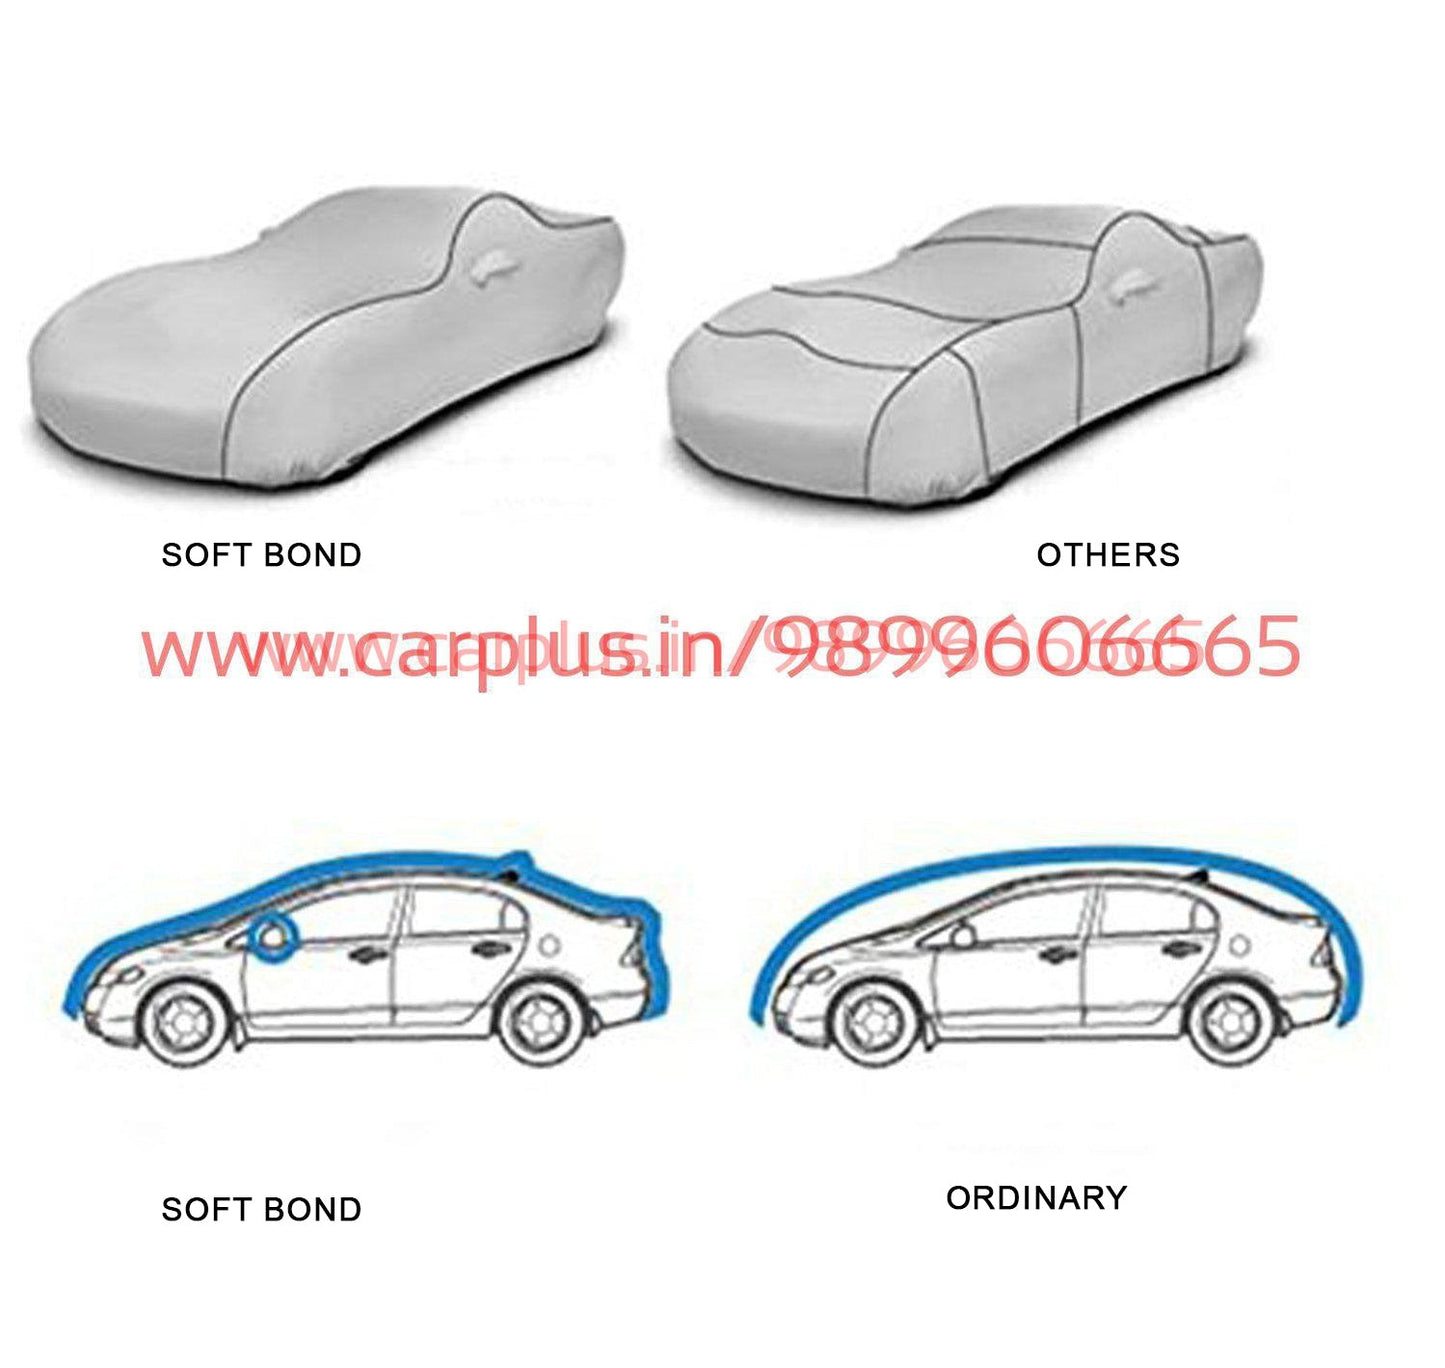 
                  
                    Soft Bond Body Cover for Toyota Hycross-Navy Blue-BODY COVER-SOFT BOND-CARPLUS
                  
                